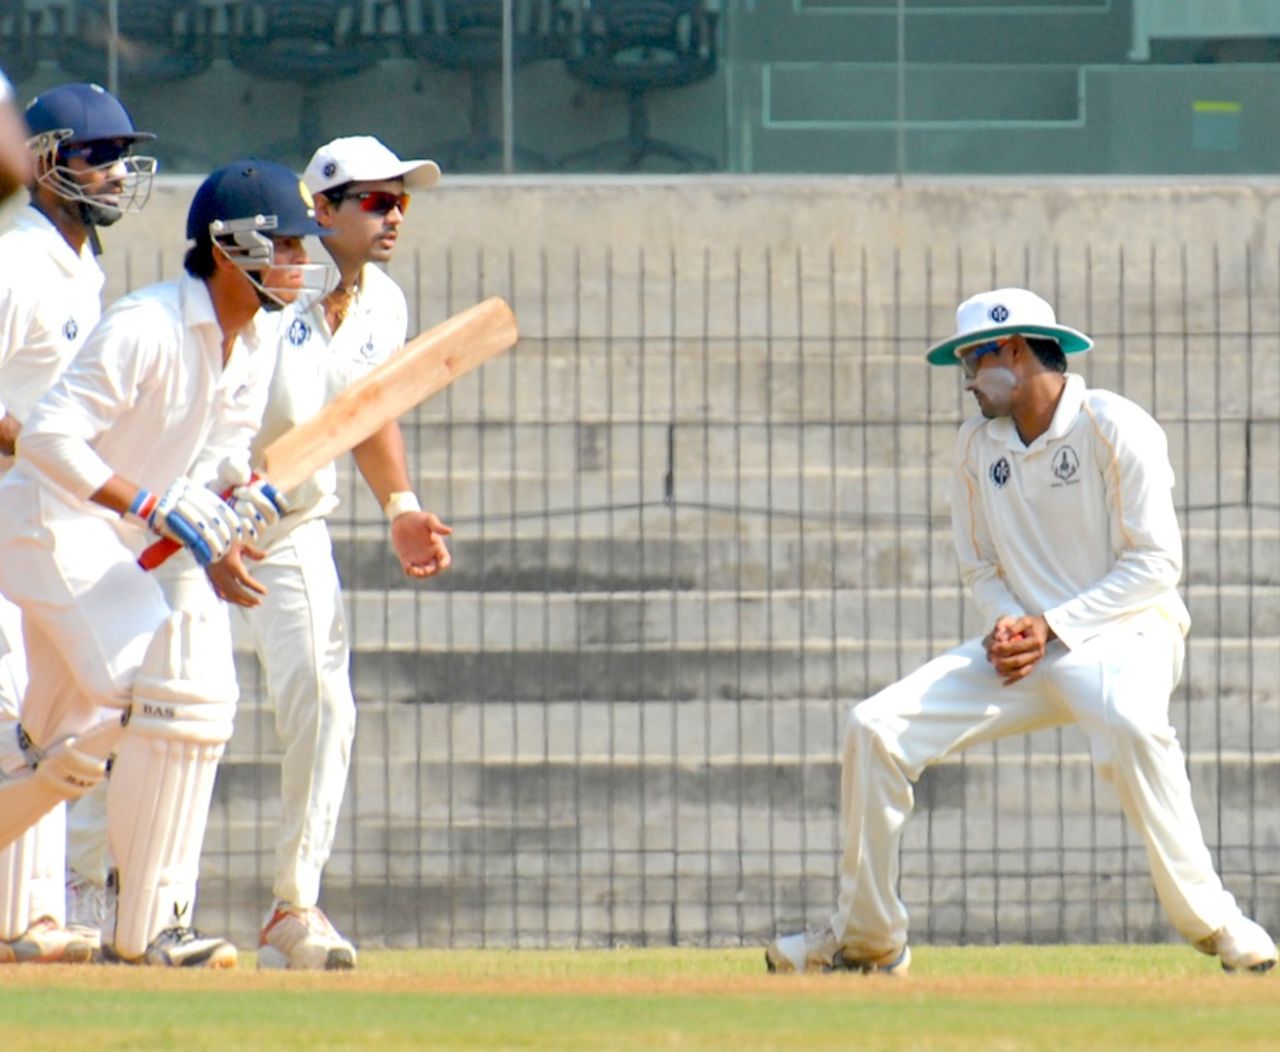 S Badrinath takes a catch at silly point ,Tamil Nadu v Maharashtra, Ranji Trophy, Group B, Chennai, 4th day, November 19, 2012